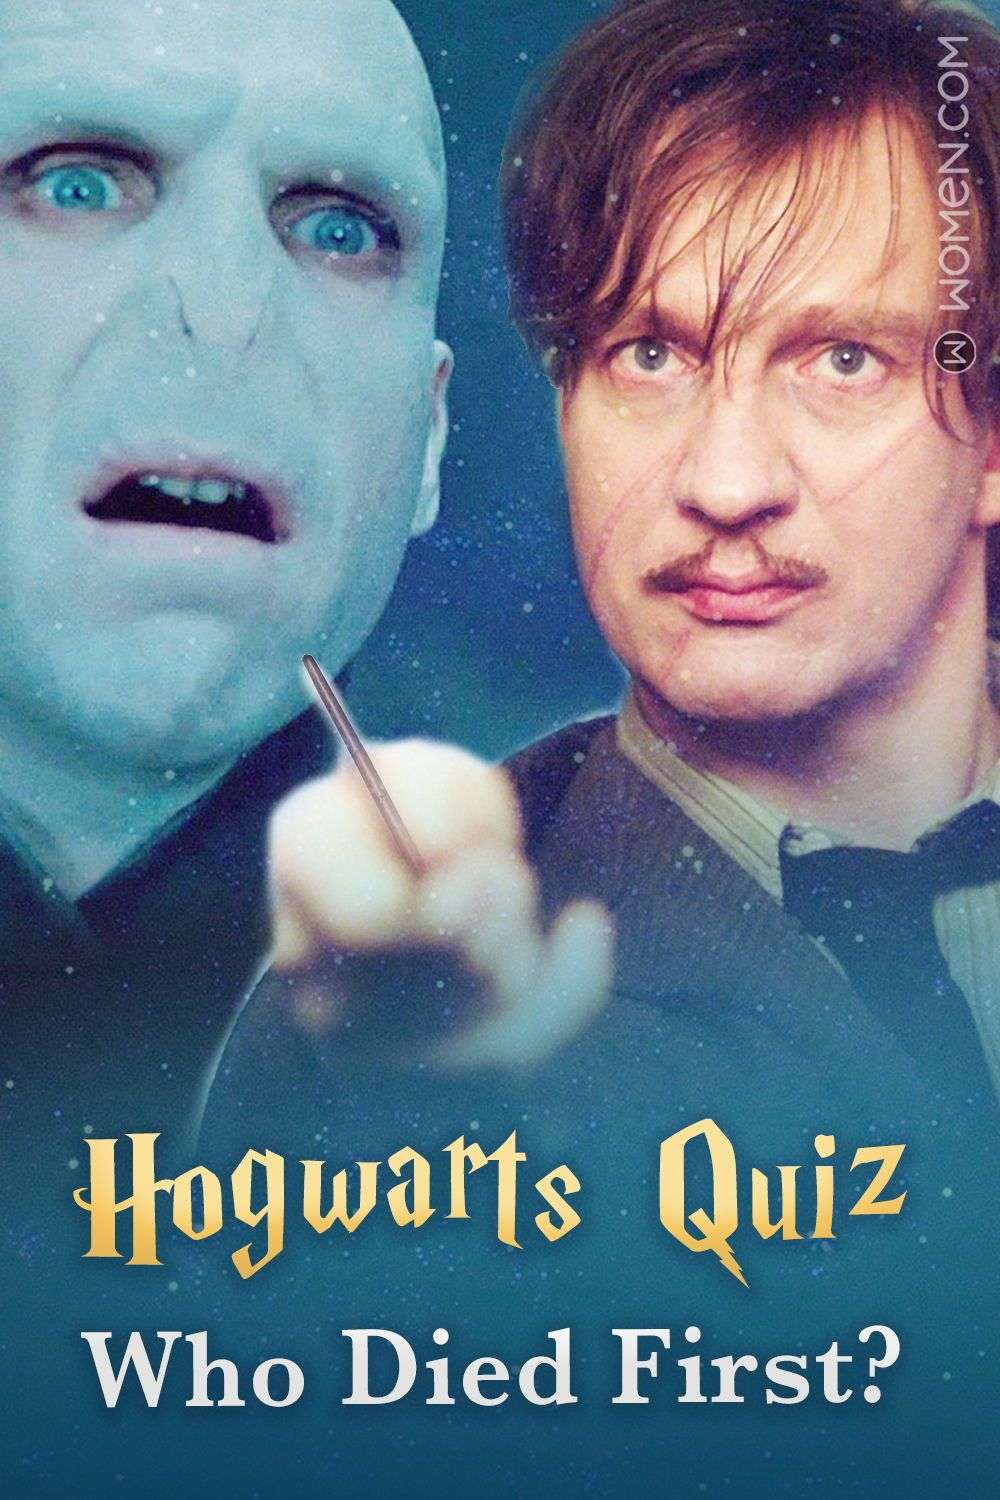 Hogwarts Quiz: Who Died First?